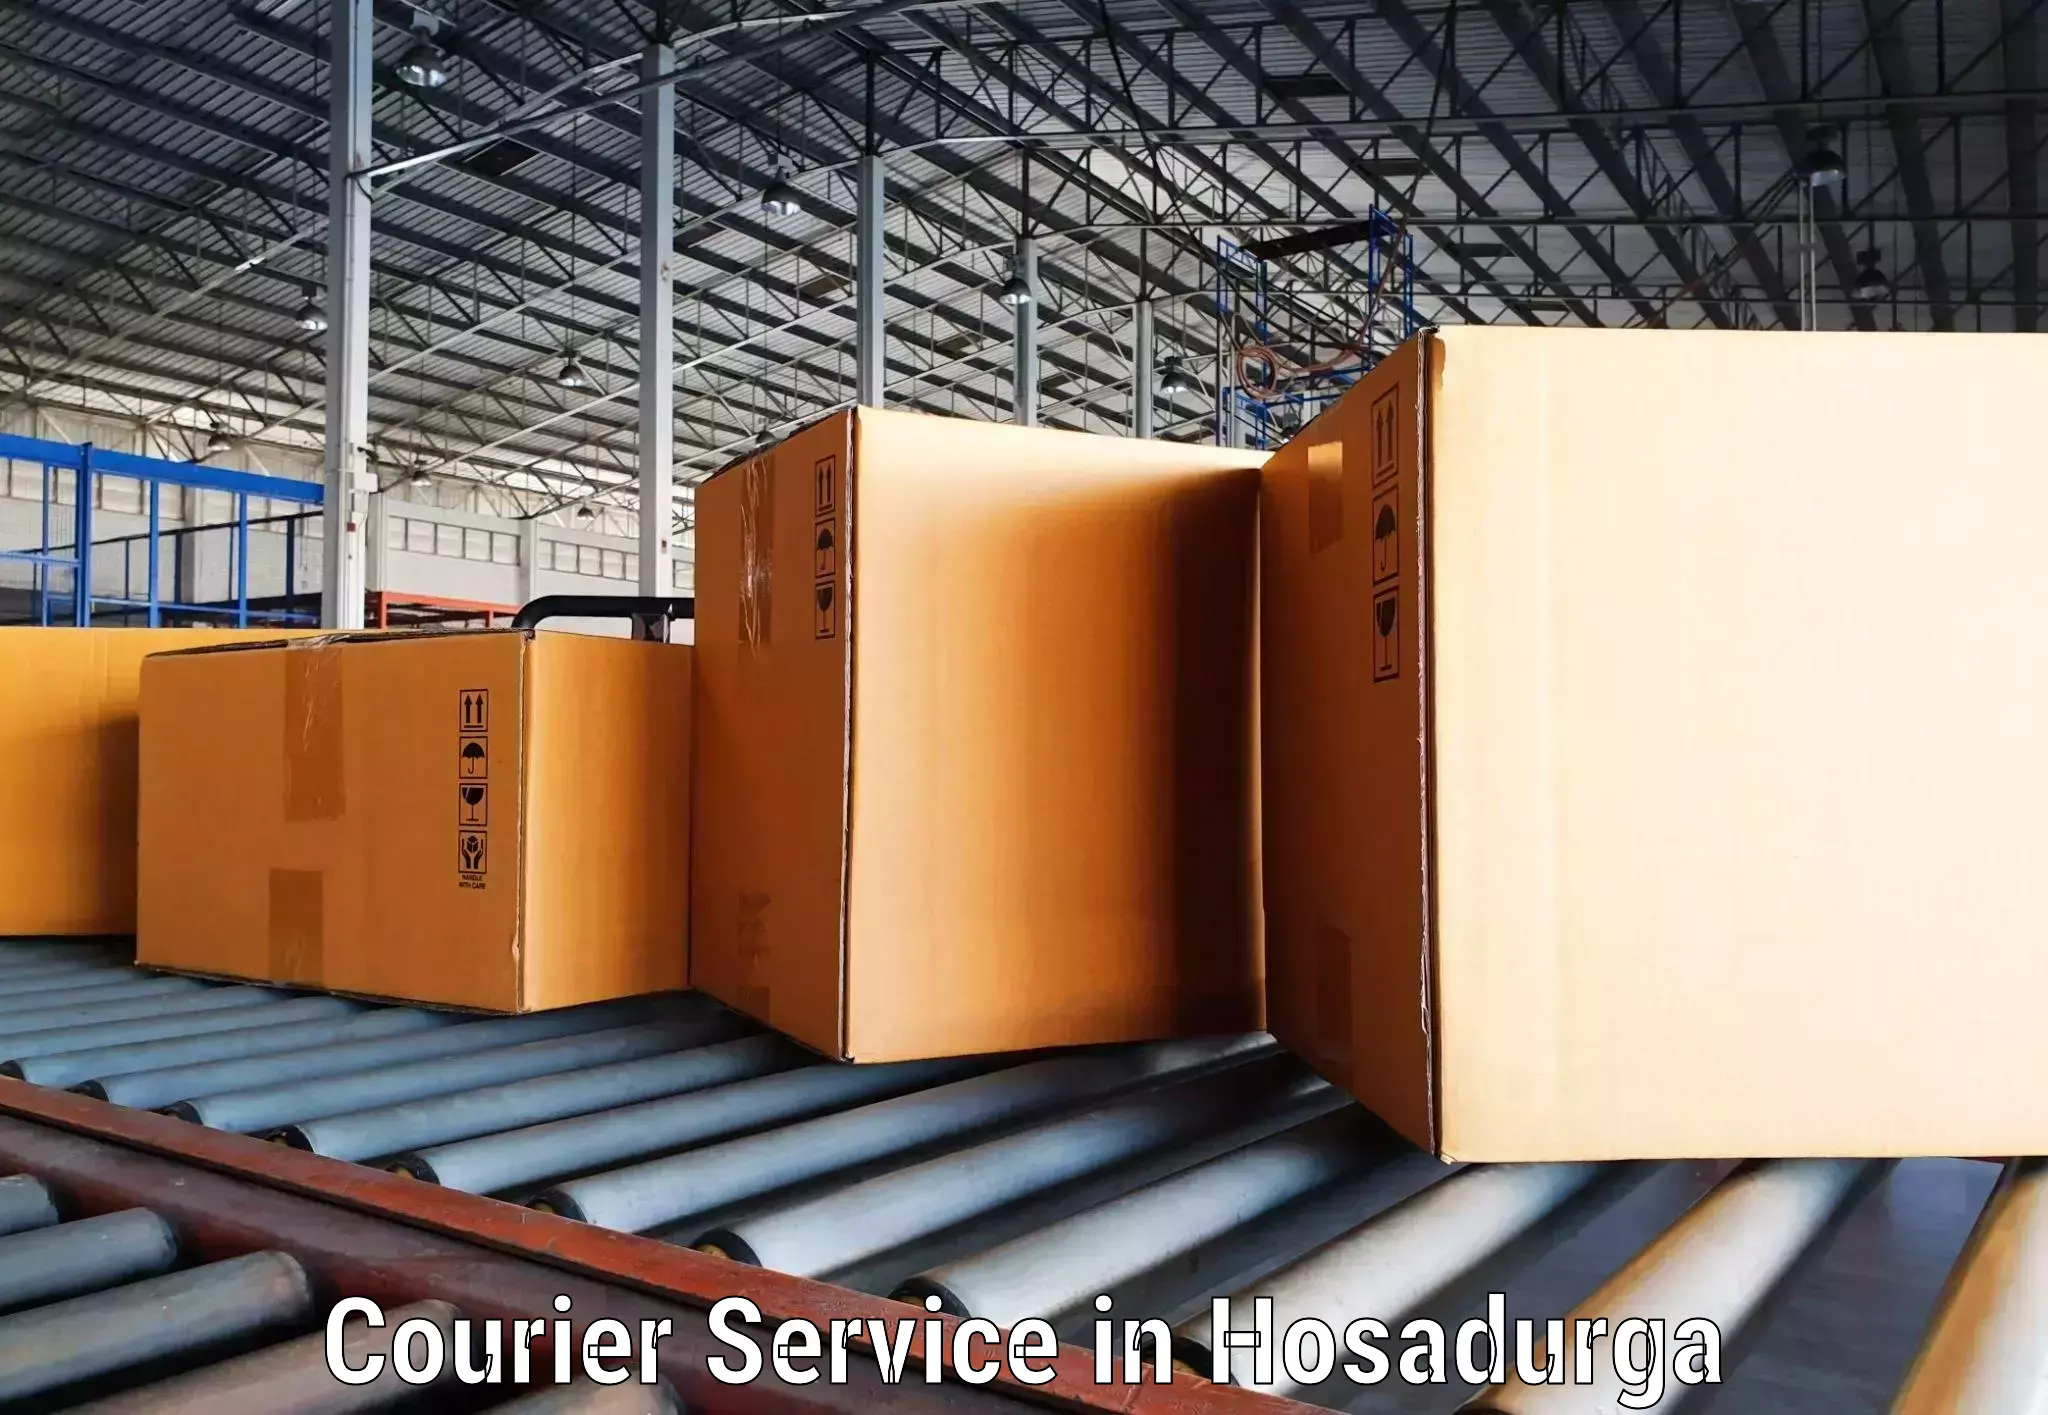 Secure package delivery in Hosadurga